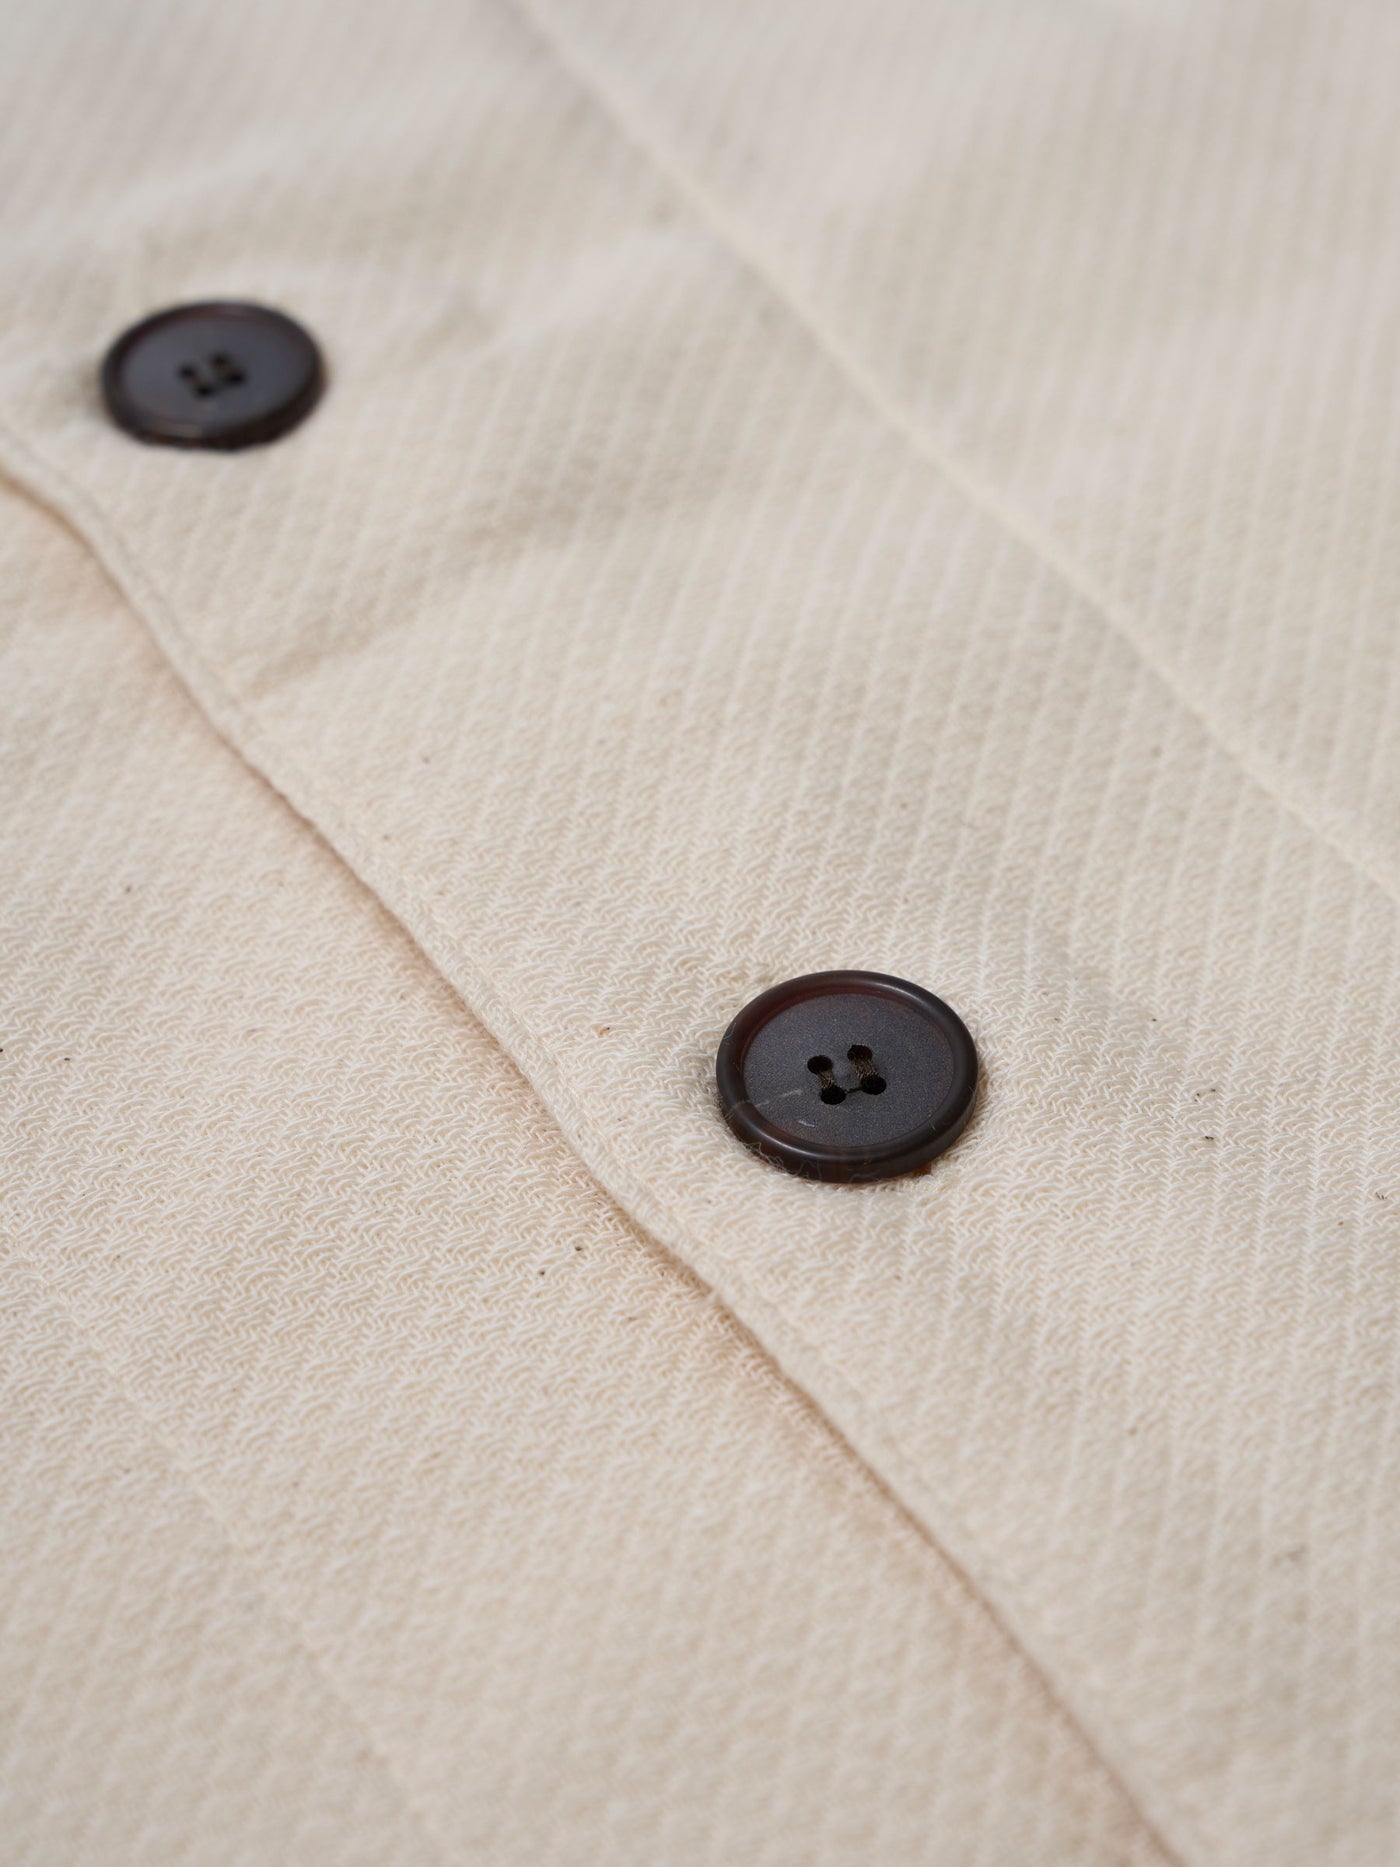 Samue Heritage-Cut Cotton Gauze Pajama Set in Ivory